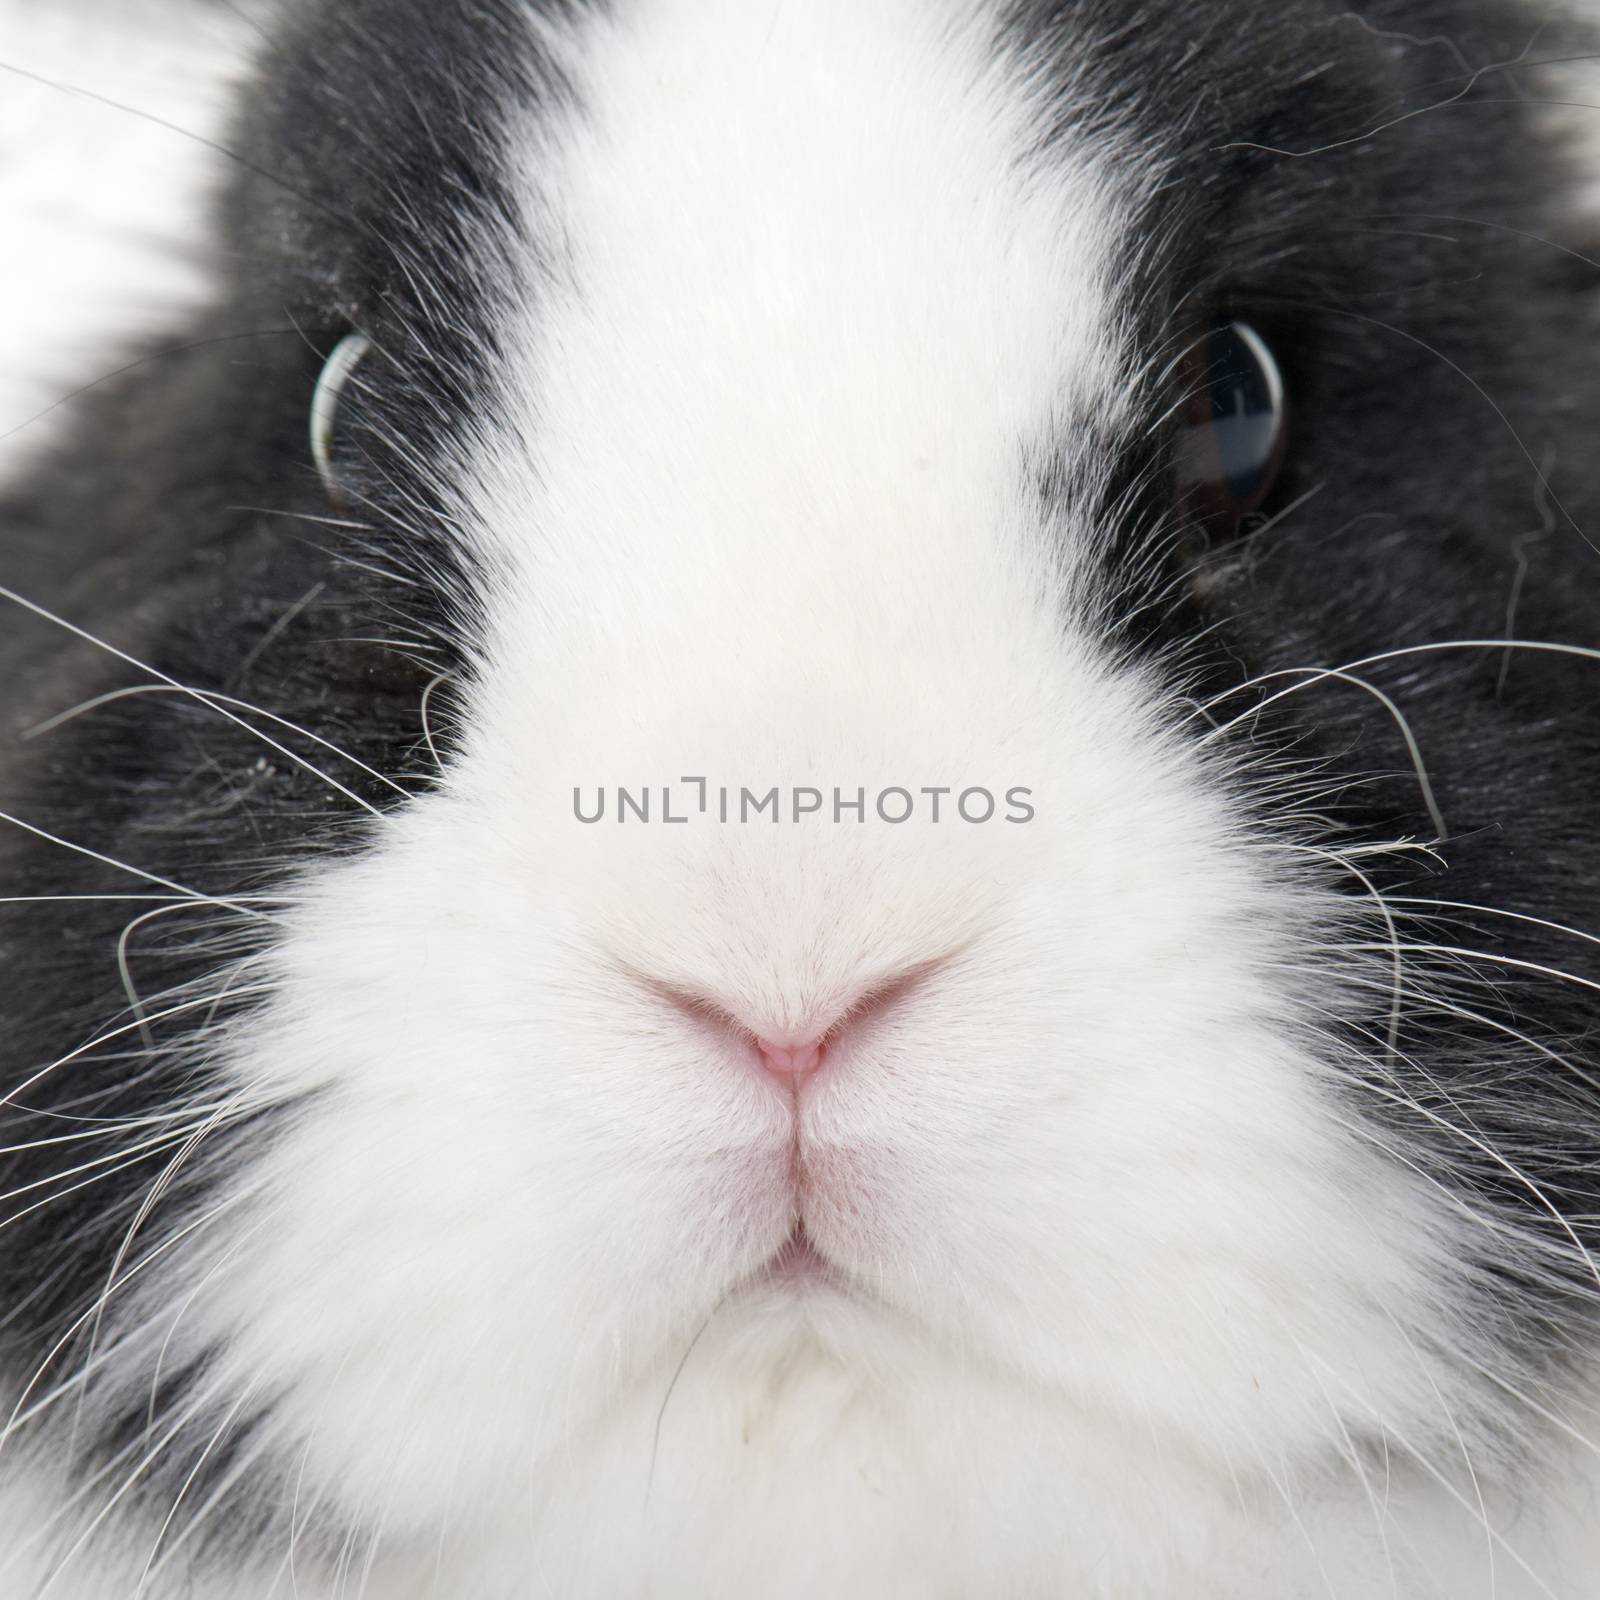 dwarf rabbit in front of white background